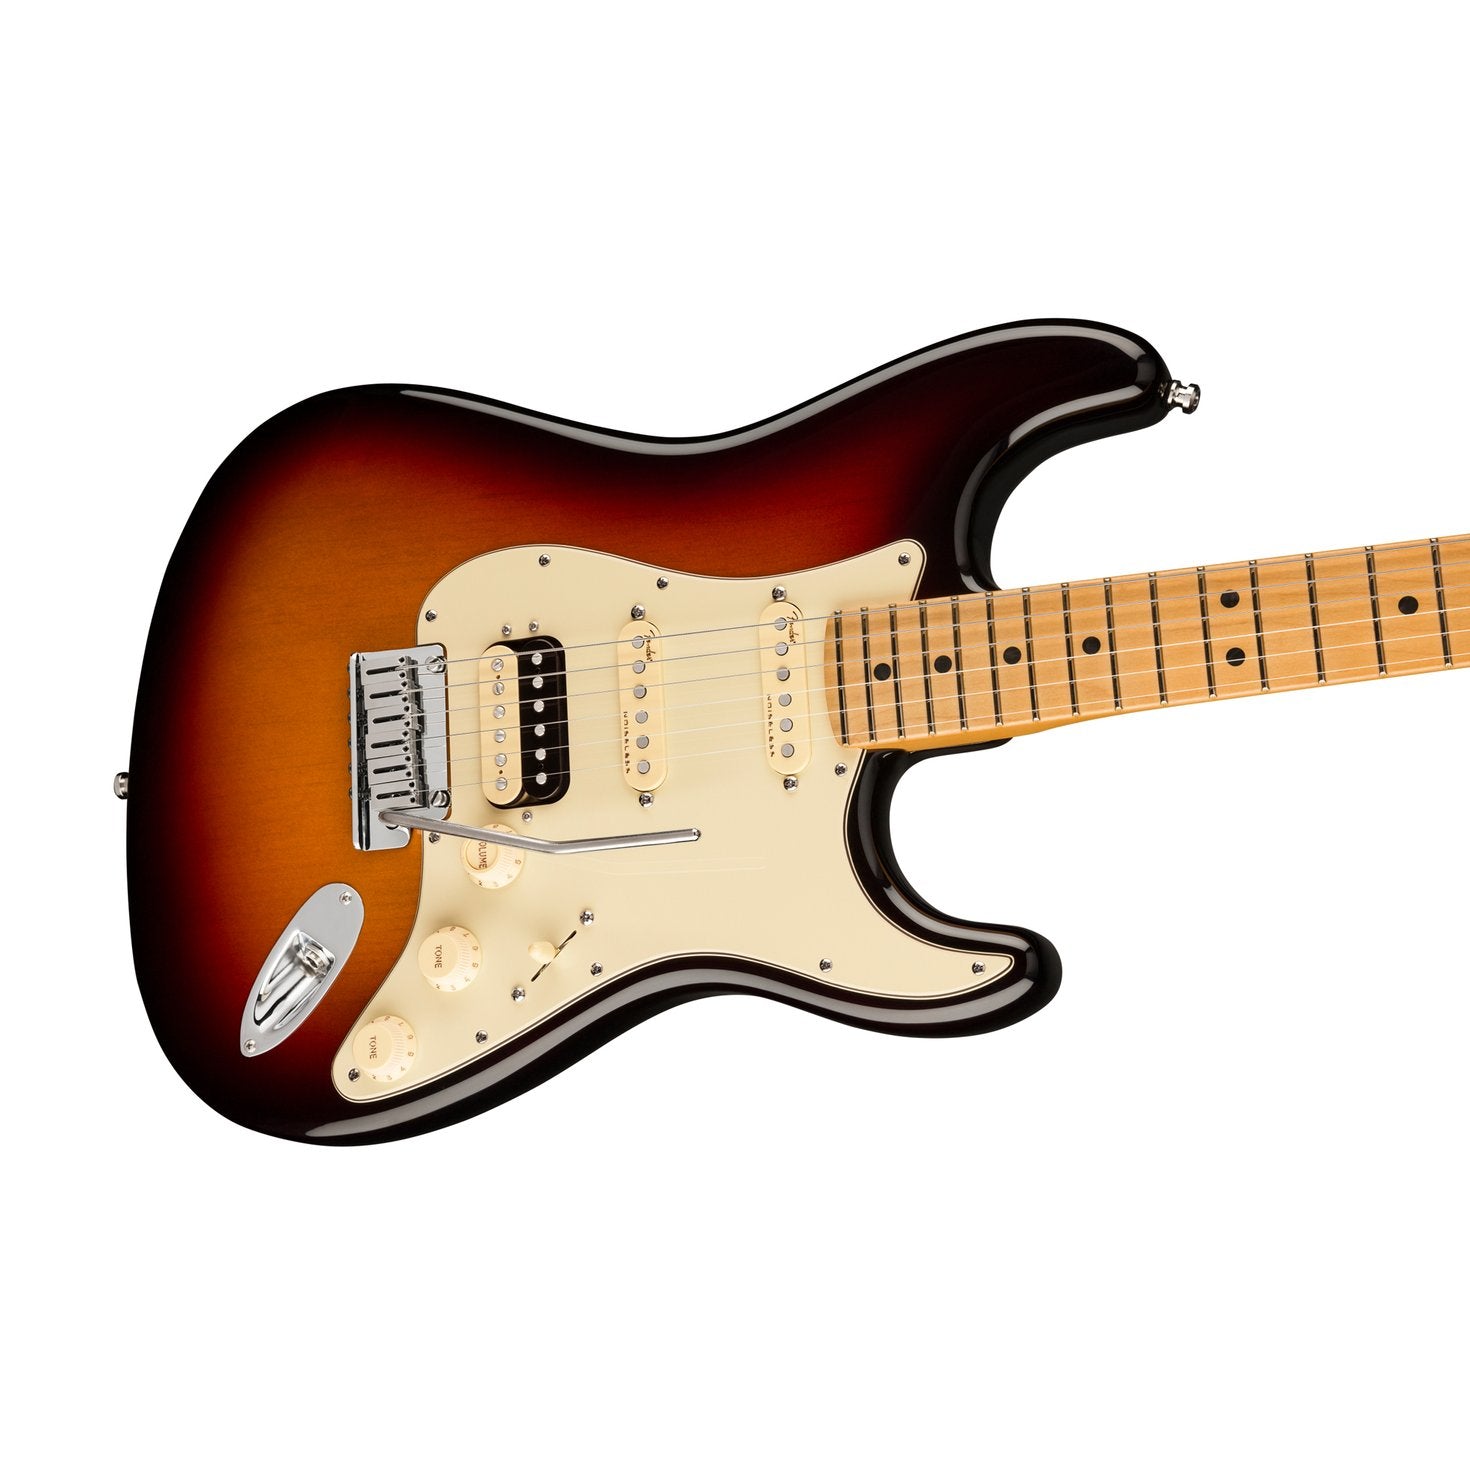 Fender American Ultra HSS Stratocaster Electric Guitar, Maple FB, Ultraburst, FENDER, ELECTRIC GUITAR, fender-electric-guitar-f03-011-8022-712, ZOSO MUSIC SDN BHD